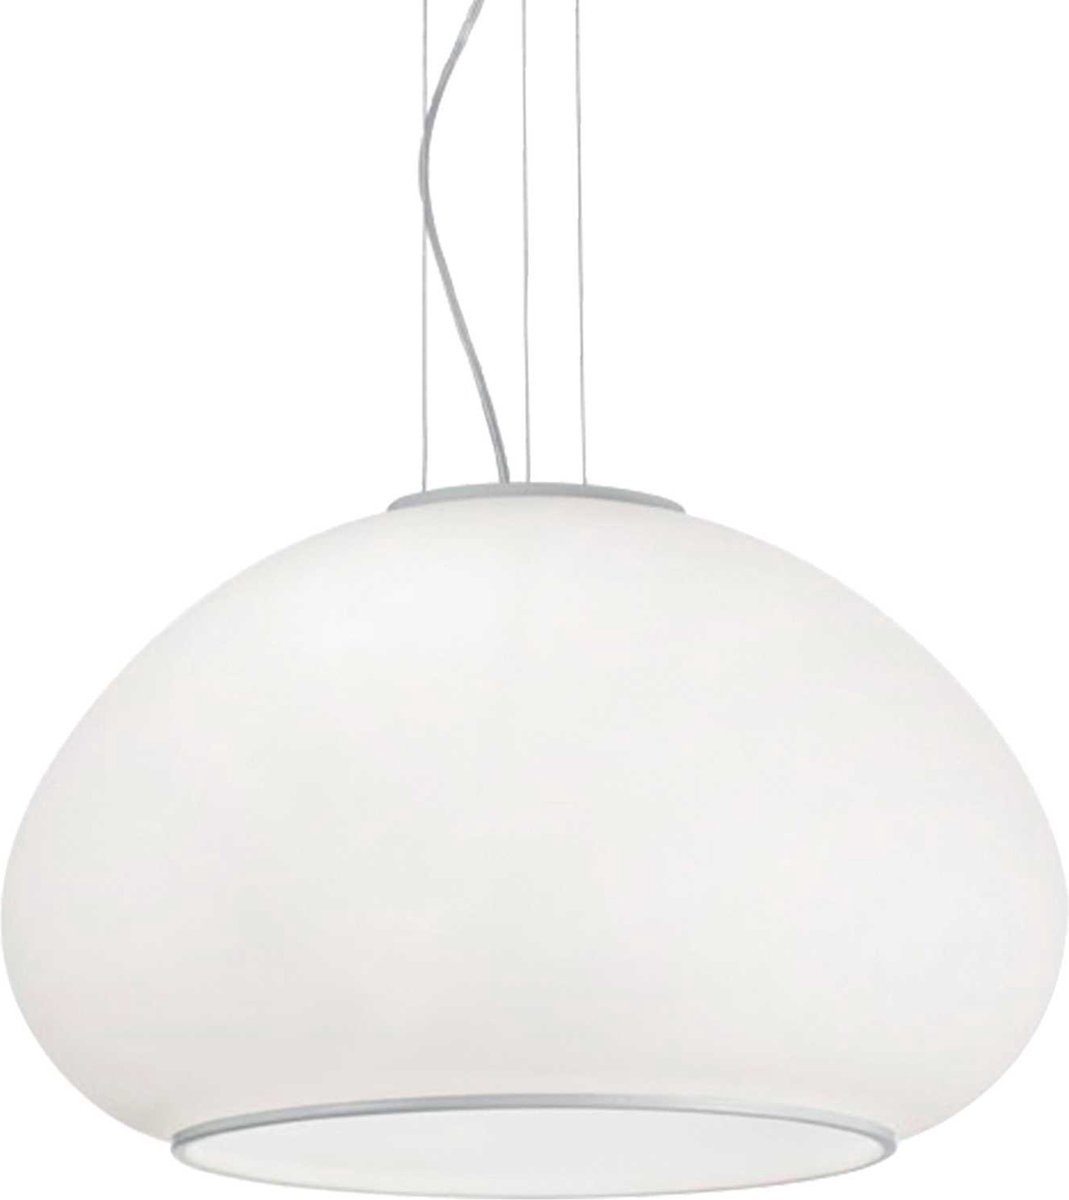 Ideal Your Lux - Hanglamp Modern - Glas - E27 - Voor Binnen - Lamp - Lampen - Woonkamer - Eetkamer - Slaapkamer - Wit